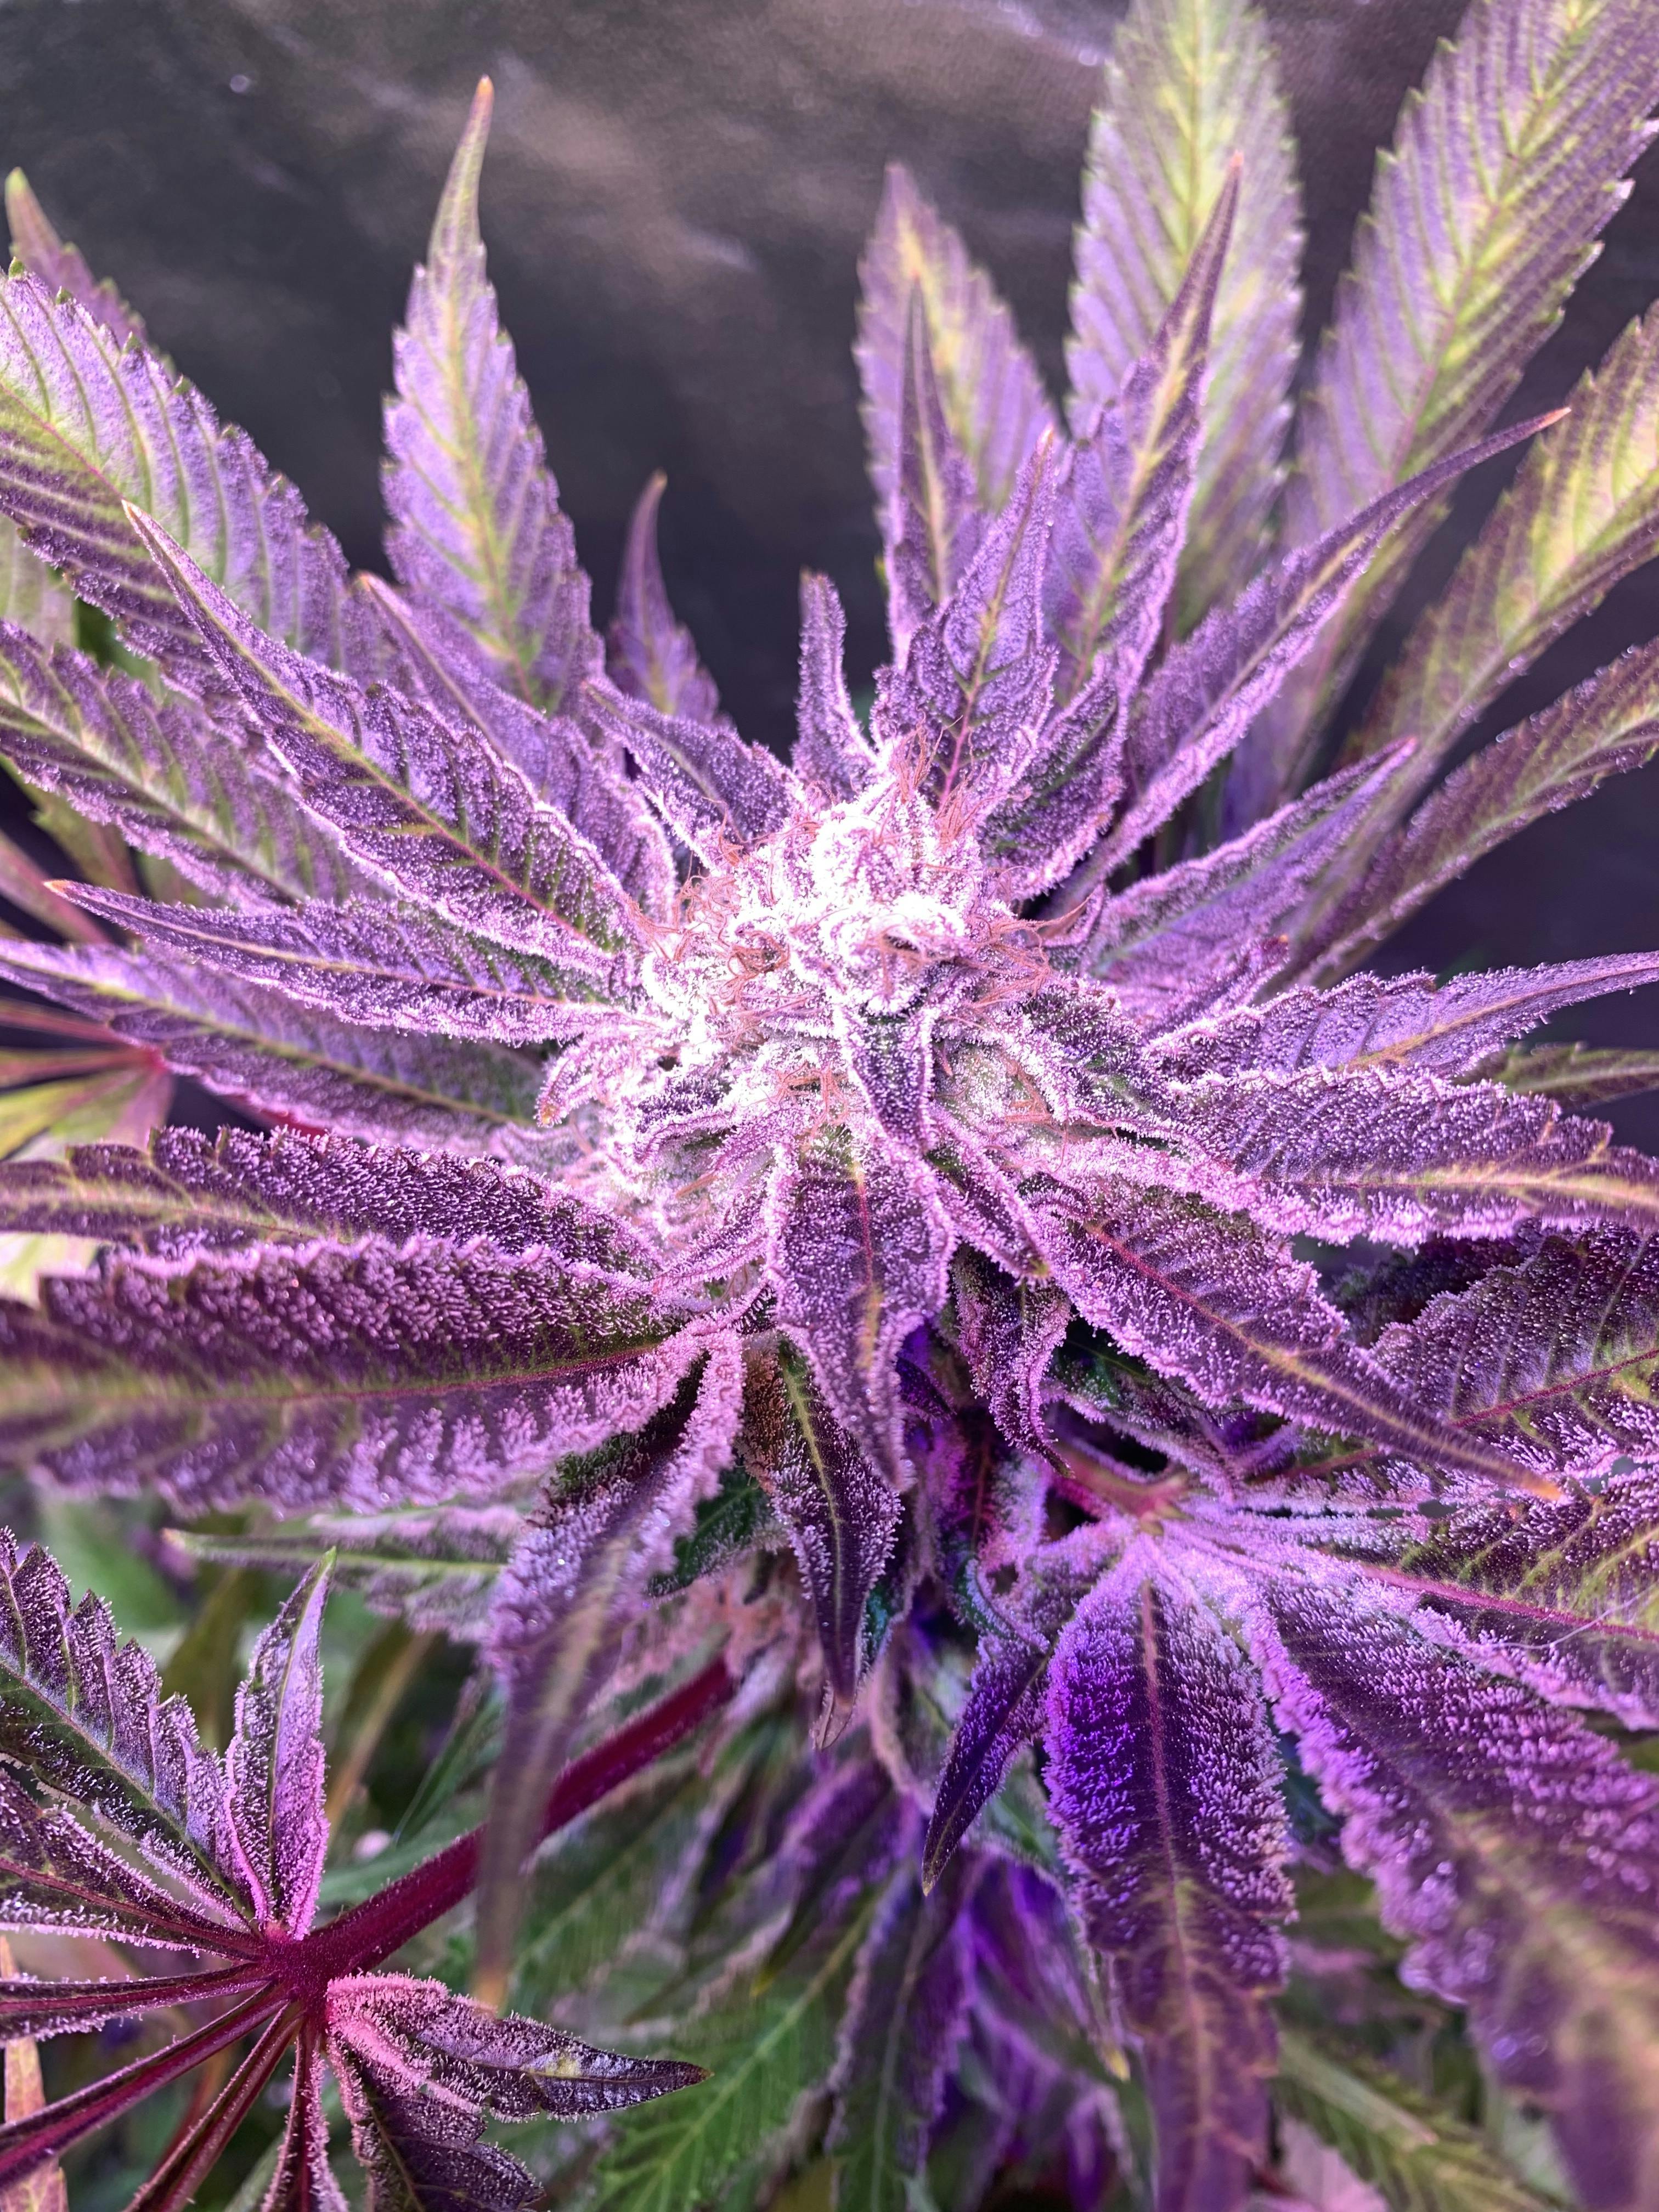 purple punch strain grow info